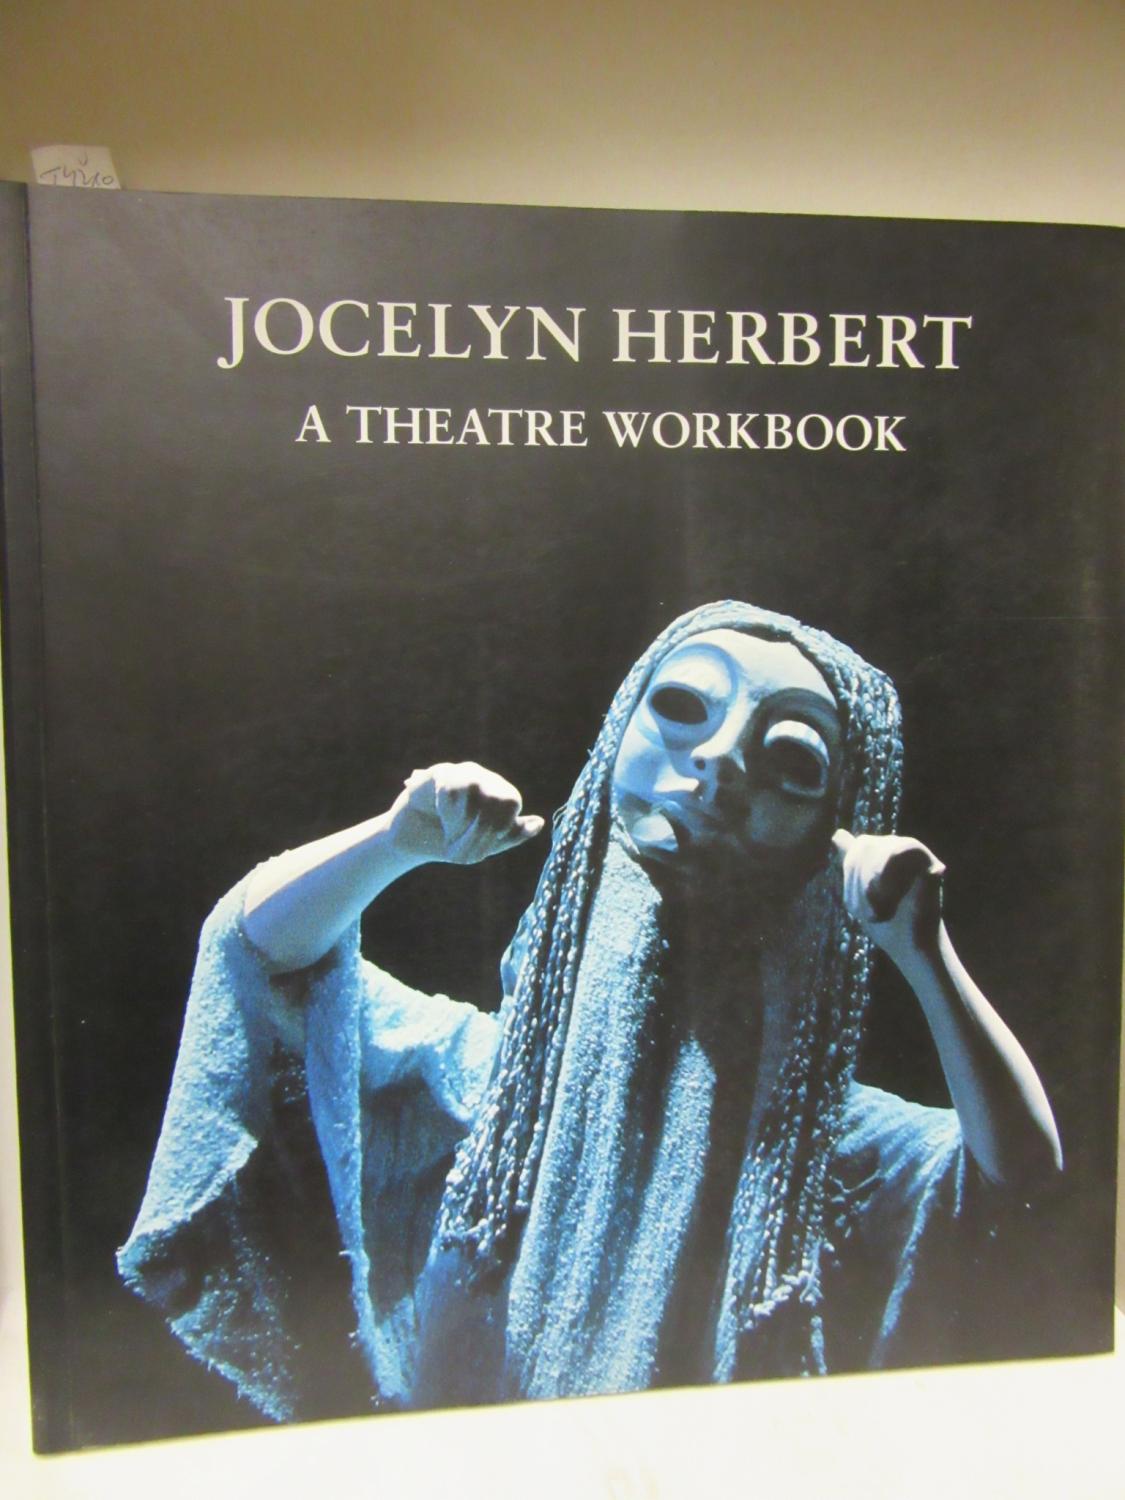 A Theatre Workbook. Edited by Cathy Courtney. - Herbert, Jocelyn